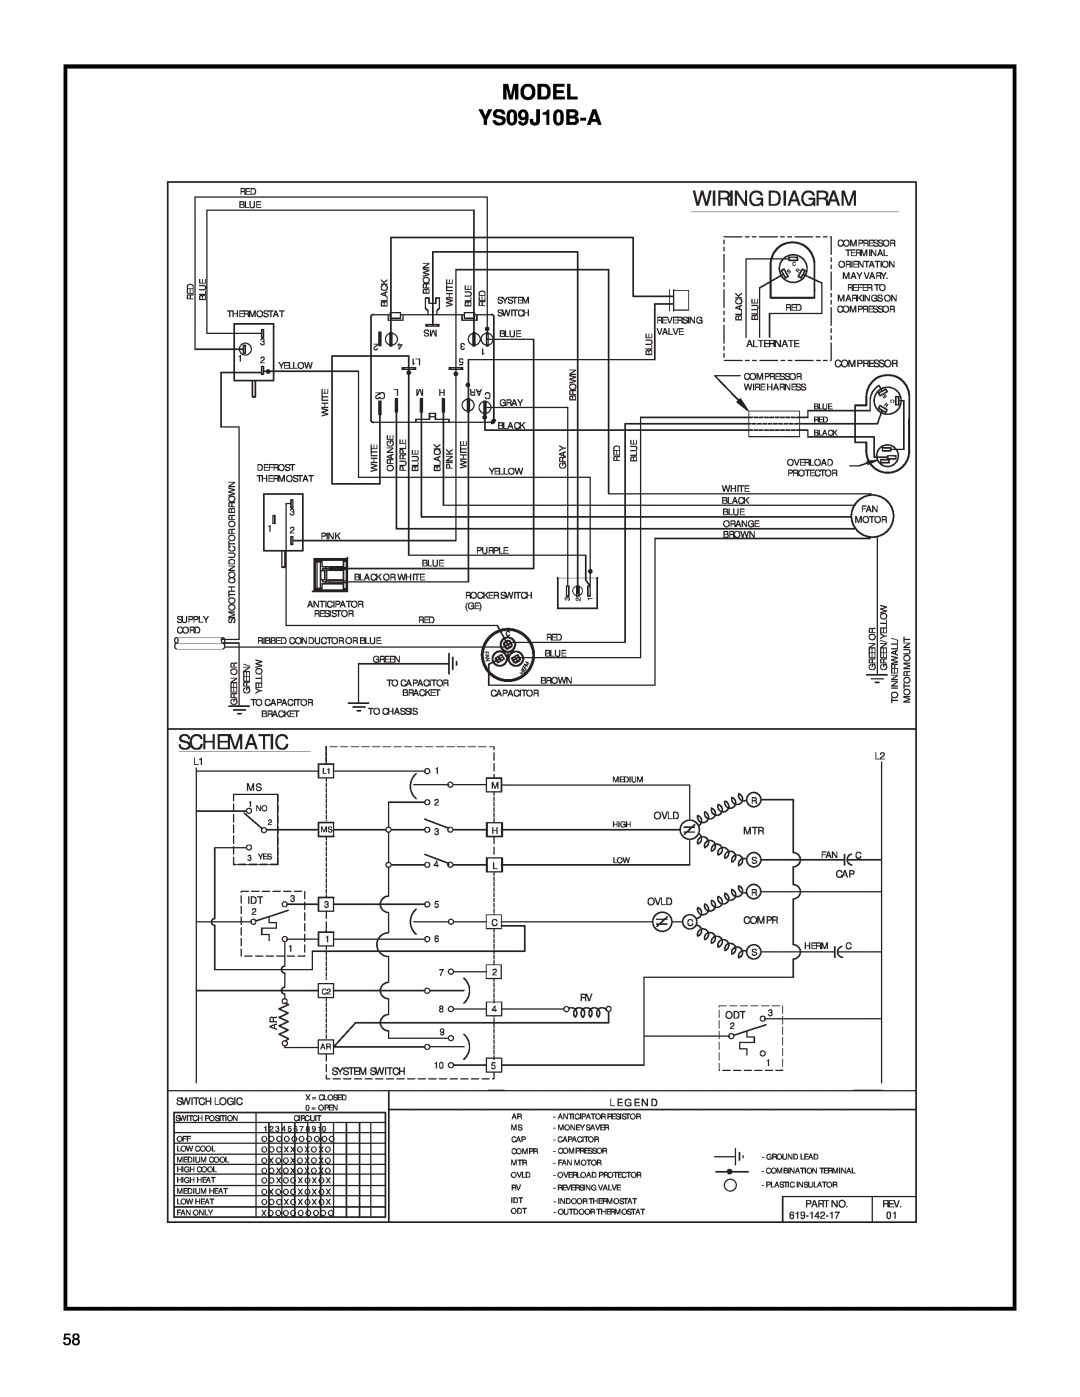 Friedrich racservmn service manual Model, YS09J10B-A, Wiring Diagram, Schematic 